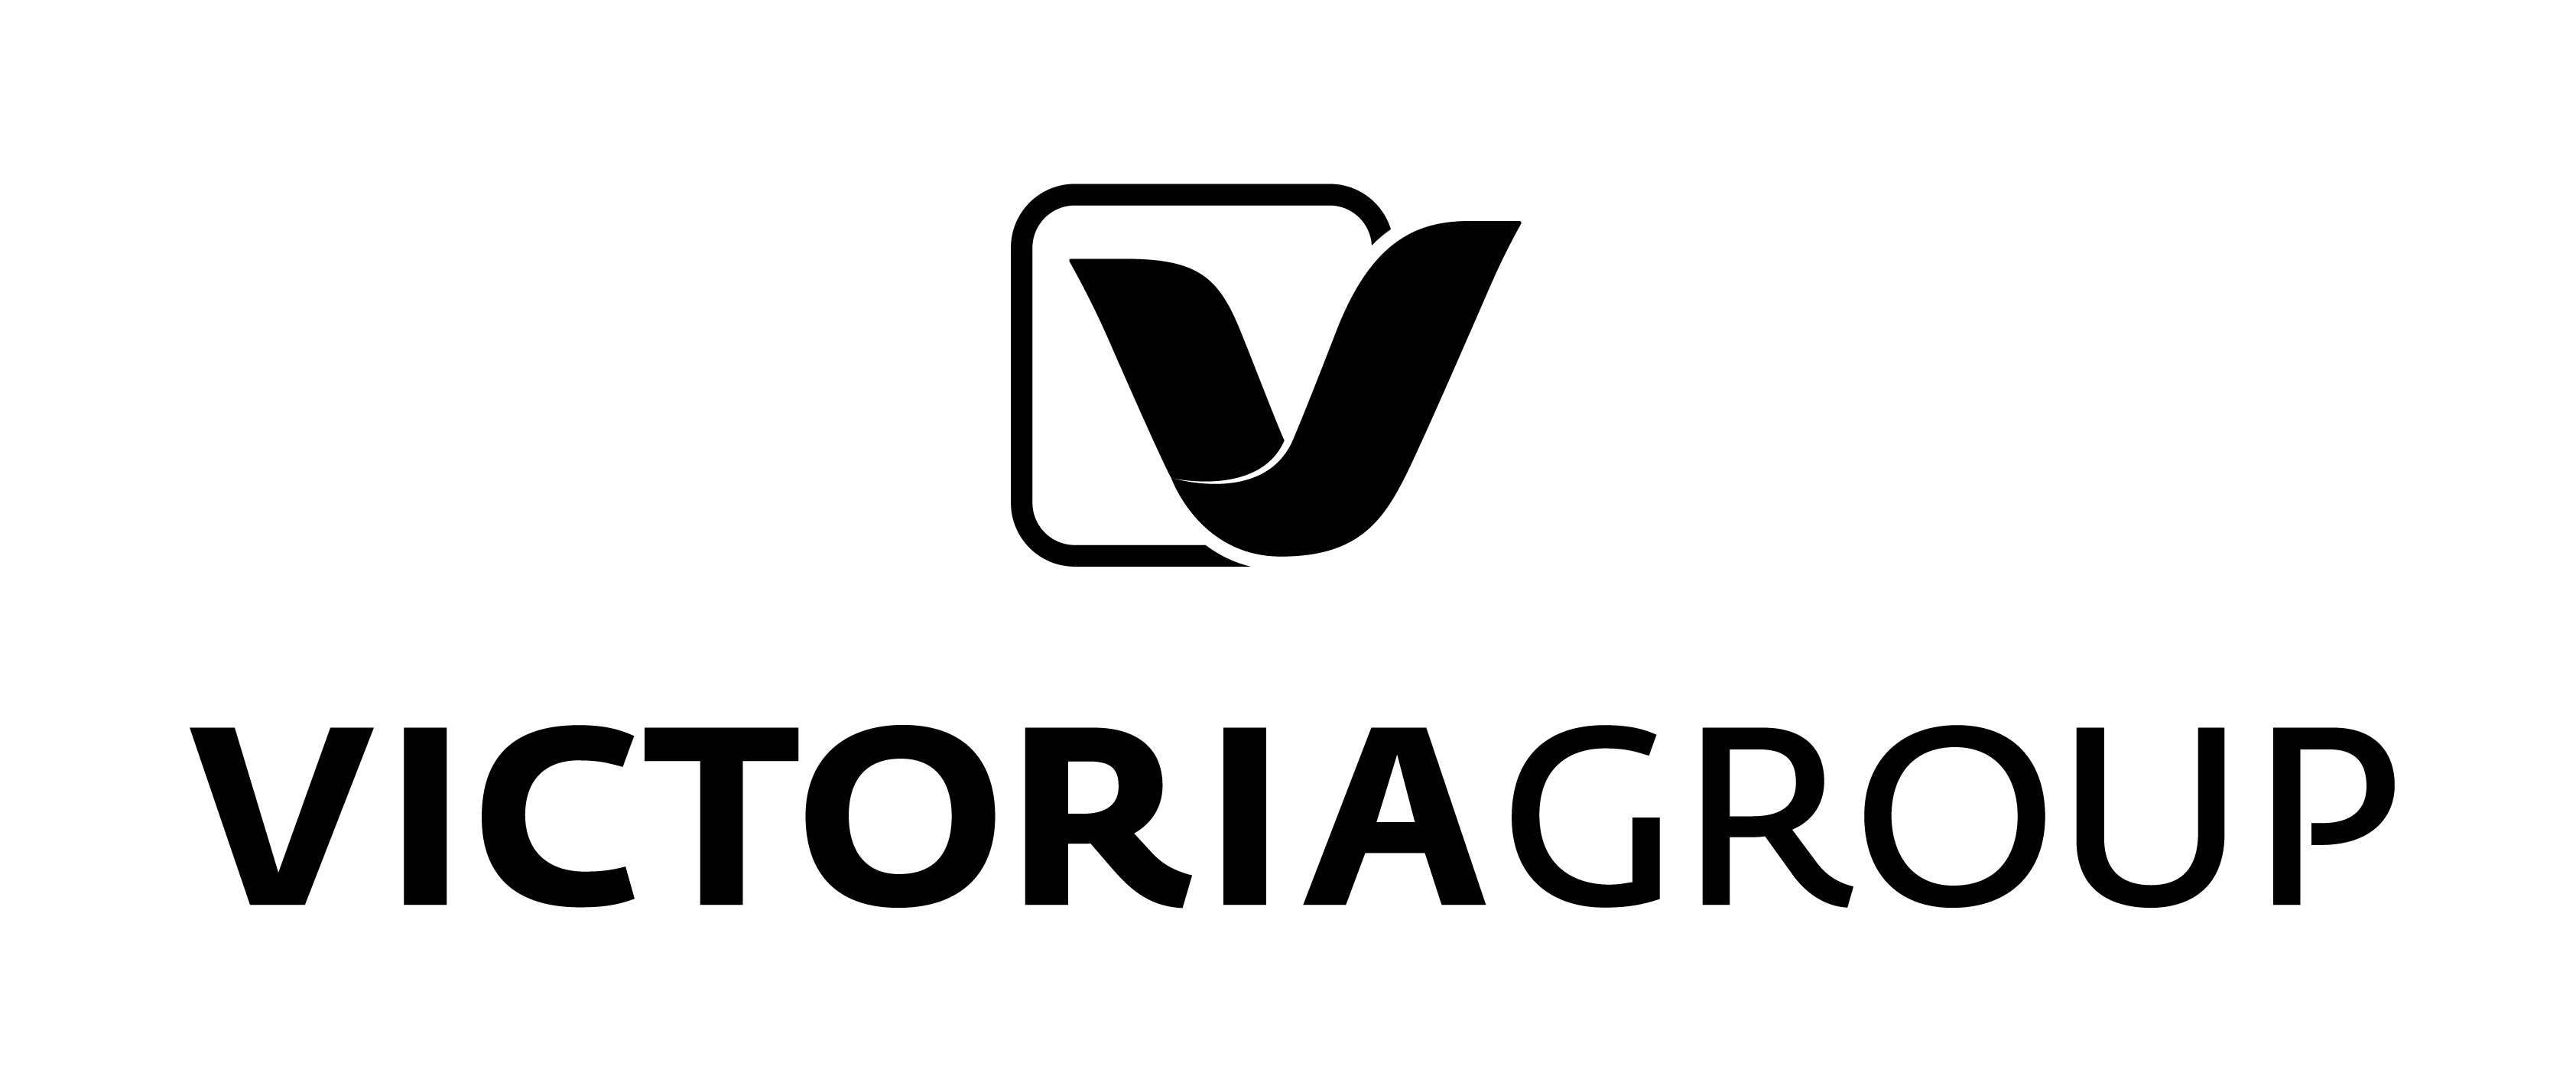 Victoria Group Logo photo - 1